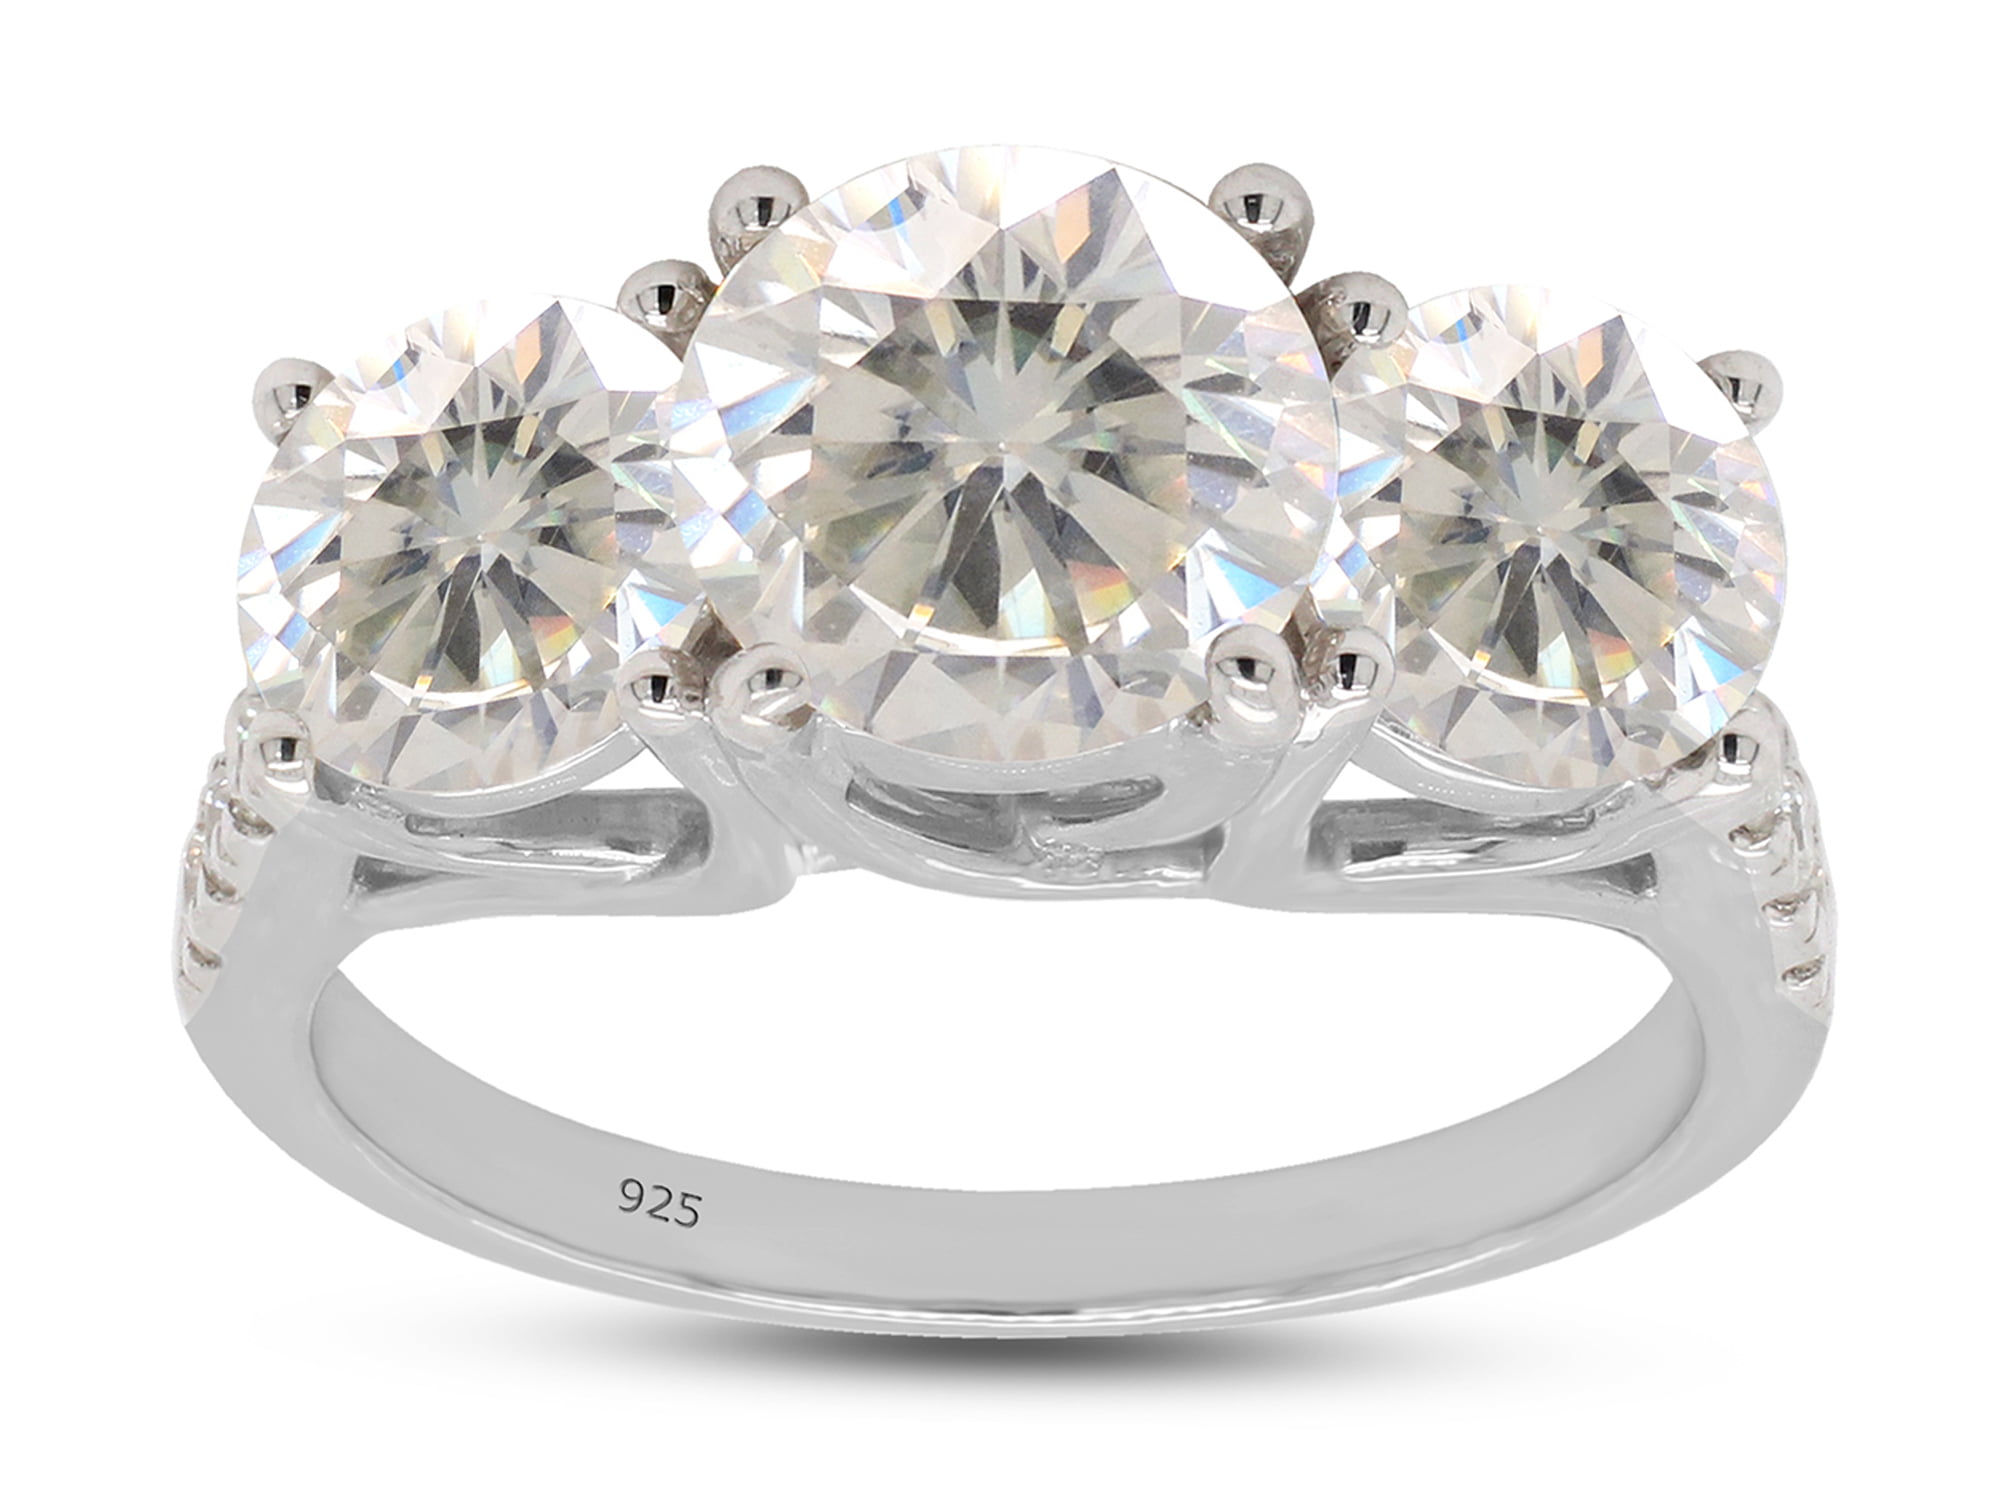 20.24 carat Fancy Intense Yellow Radiant Cut Diamond Ring (GIA Certified) —  Shreve, Crump & Low